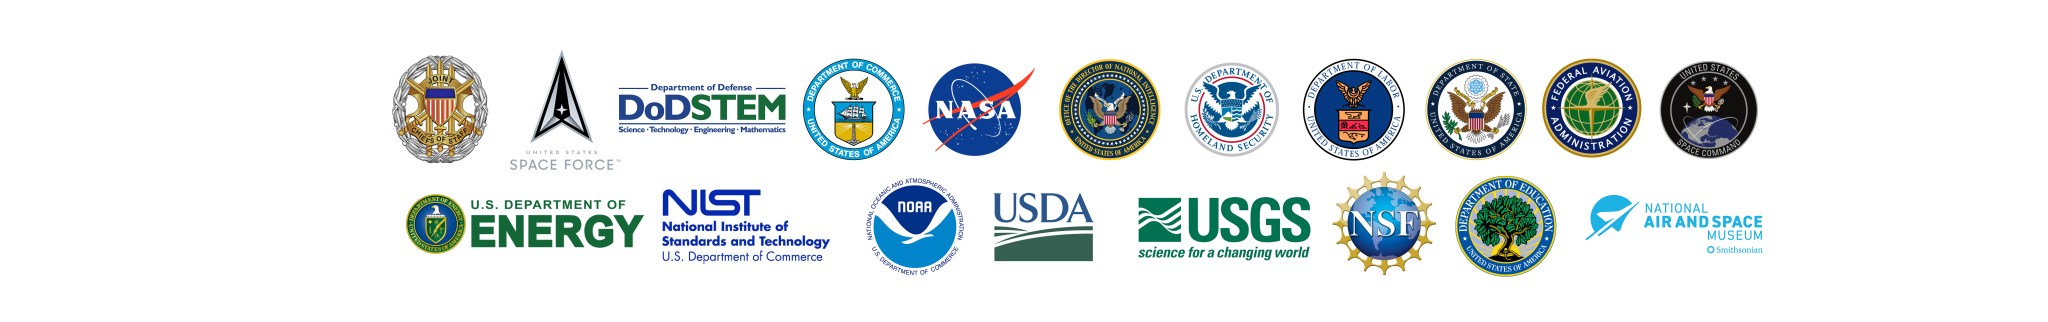 space week logos